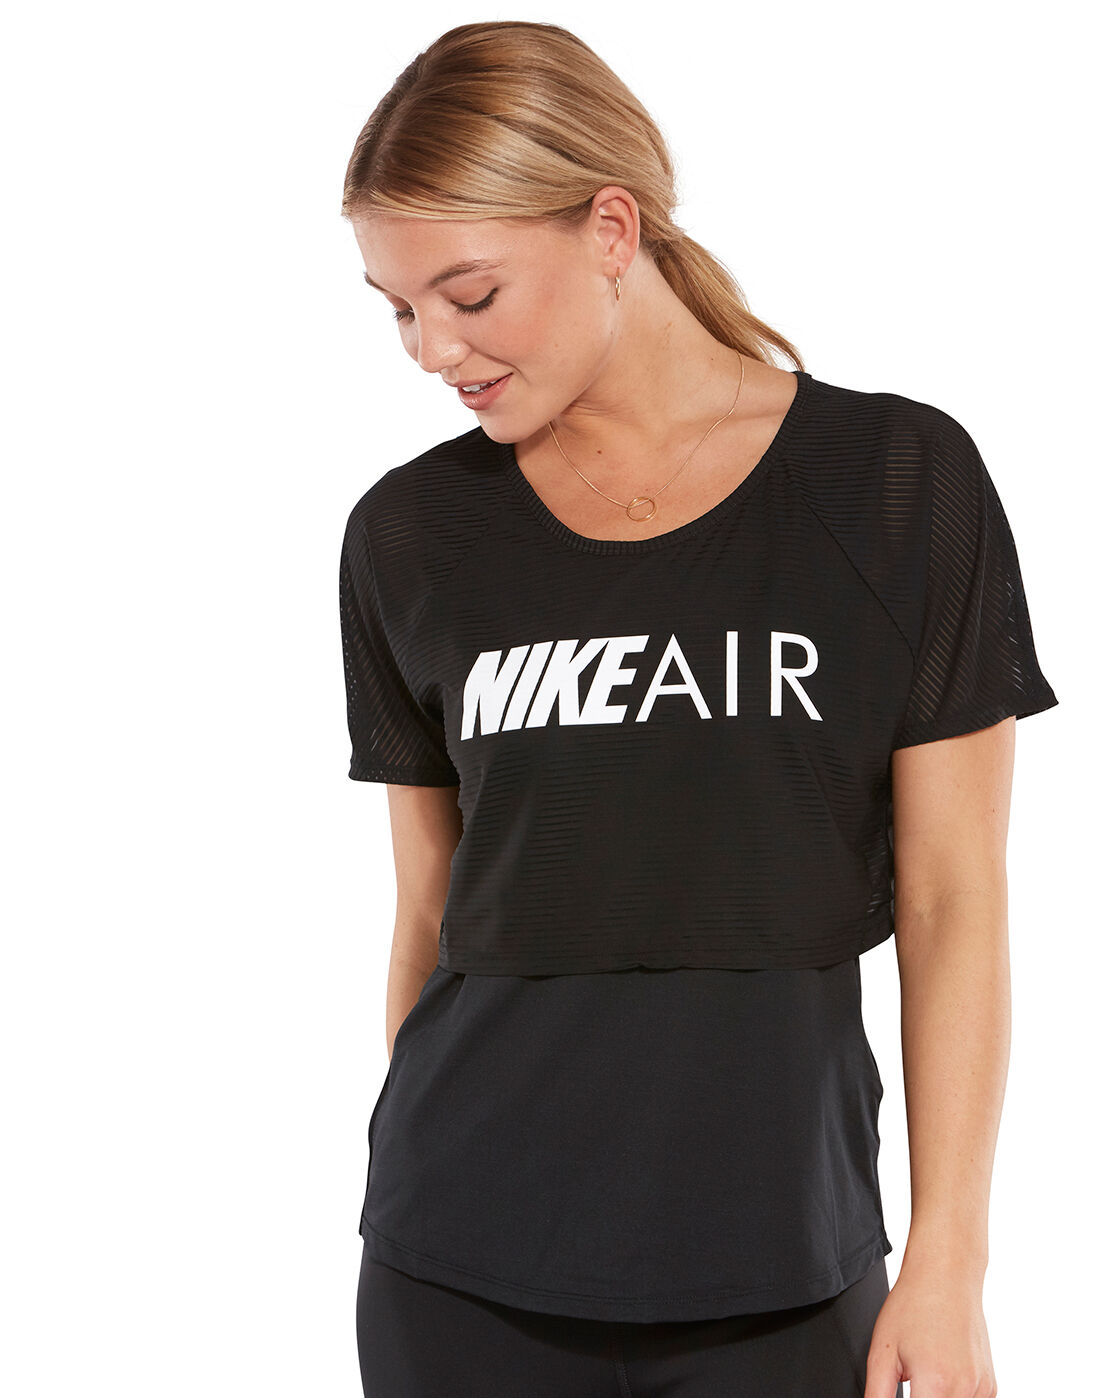 Women's Black Nike Air Running T-Shirt 